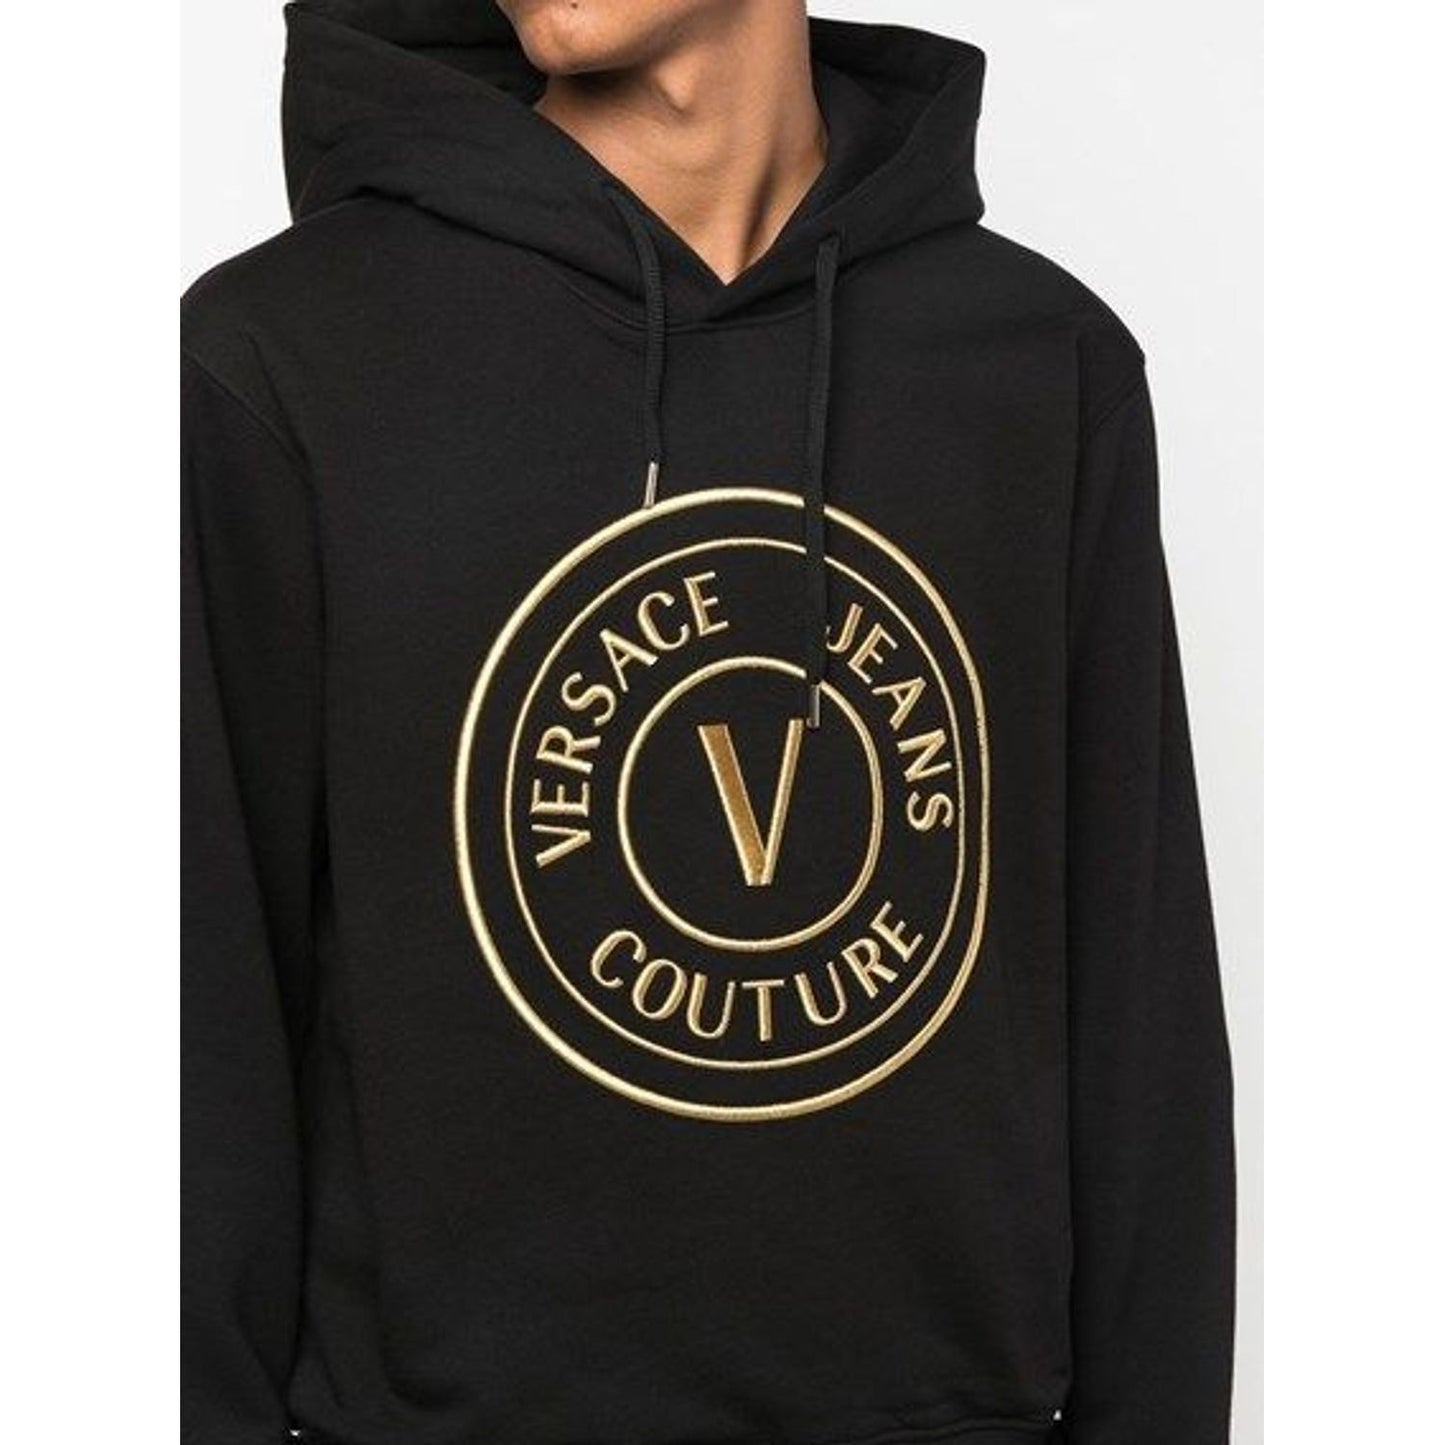 Versace Jeans Chic Black Hooded Sweatshirt black-cotton-logo-details-hooded-sweatshirt-1